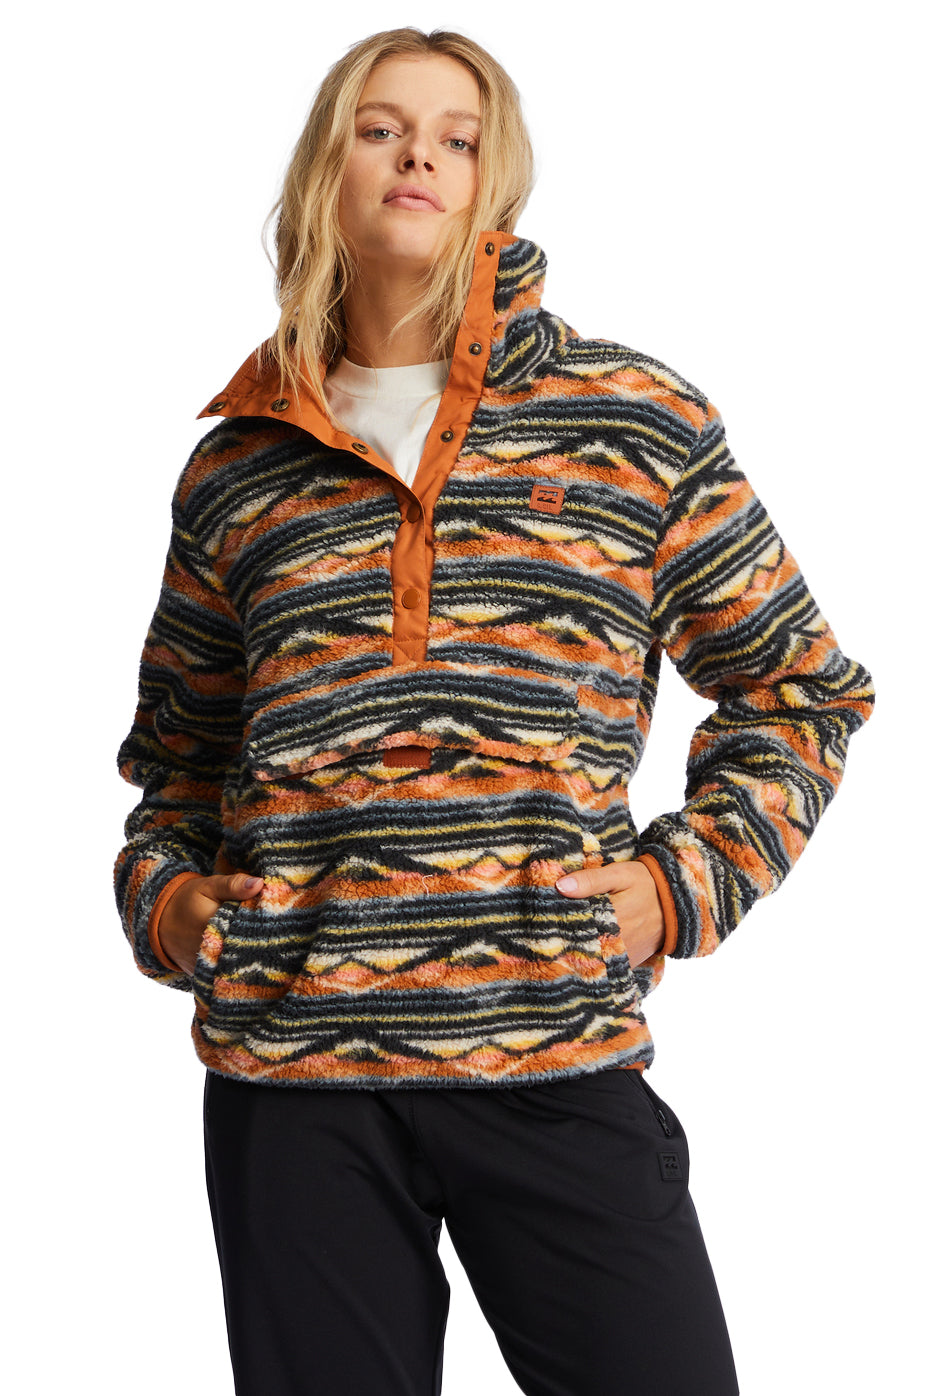 Switchback - Pullover Sherpa Fleece for Women